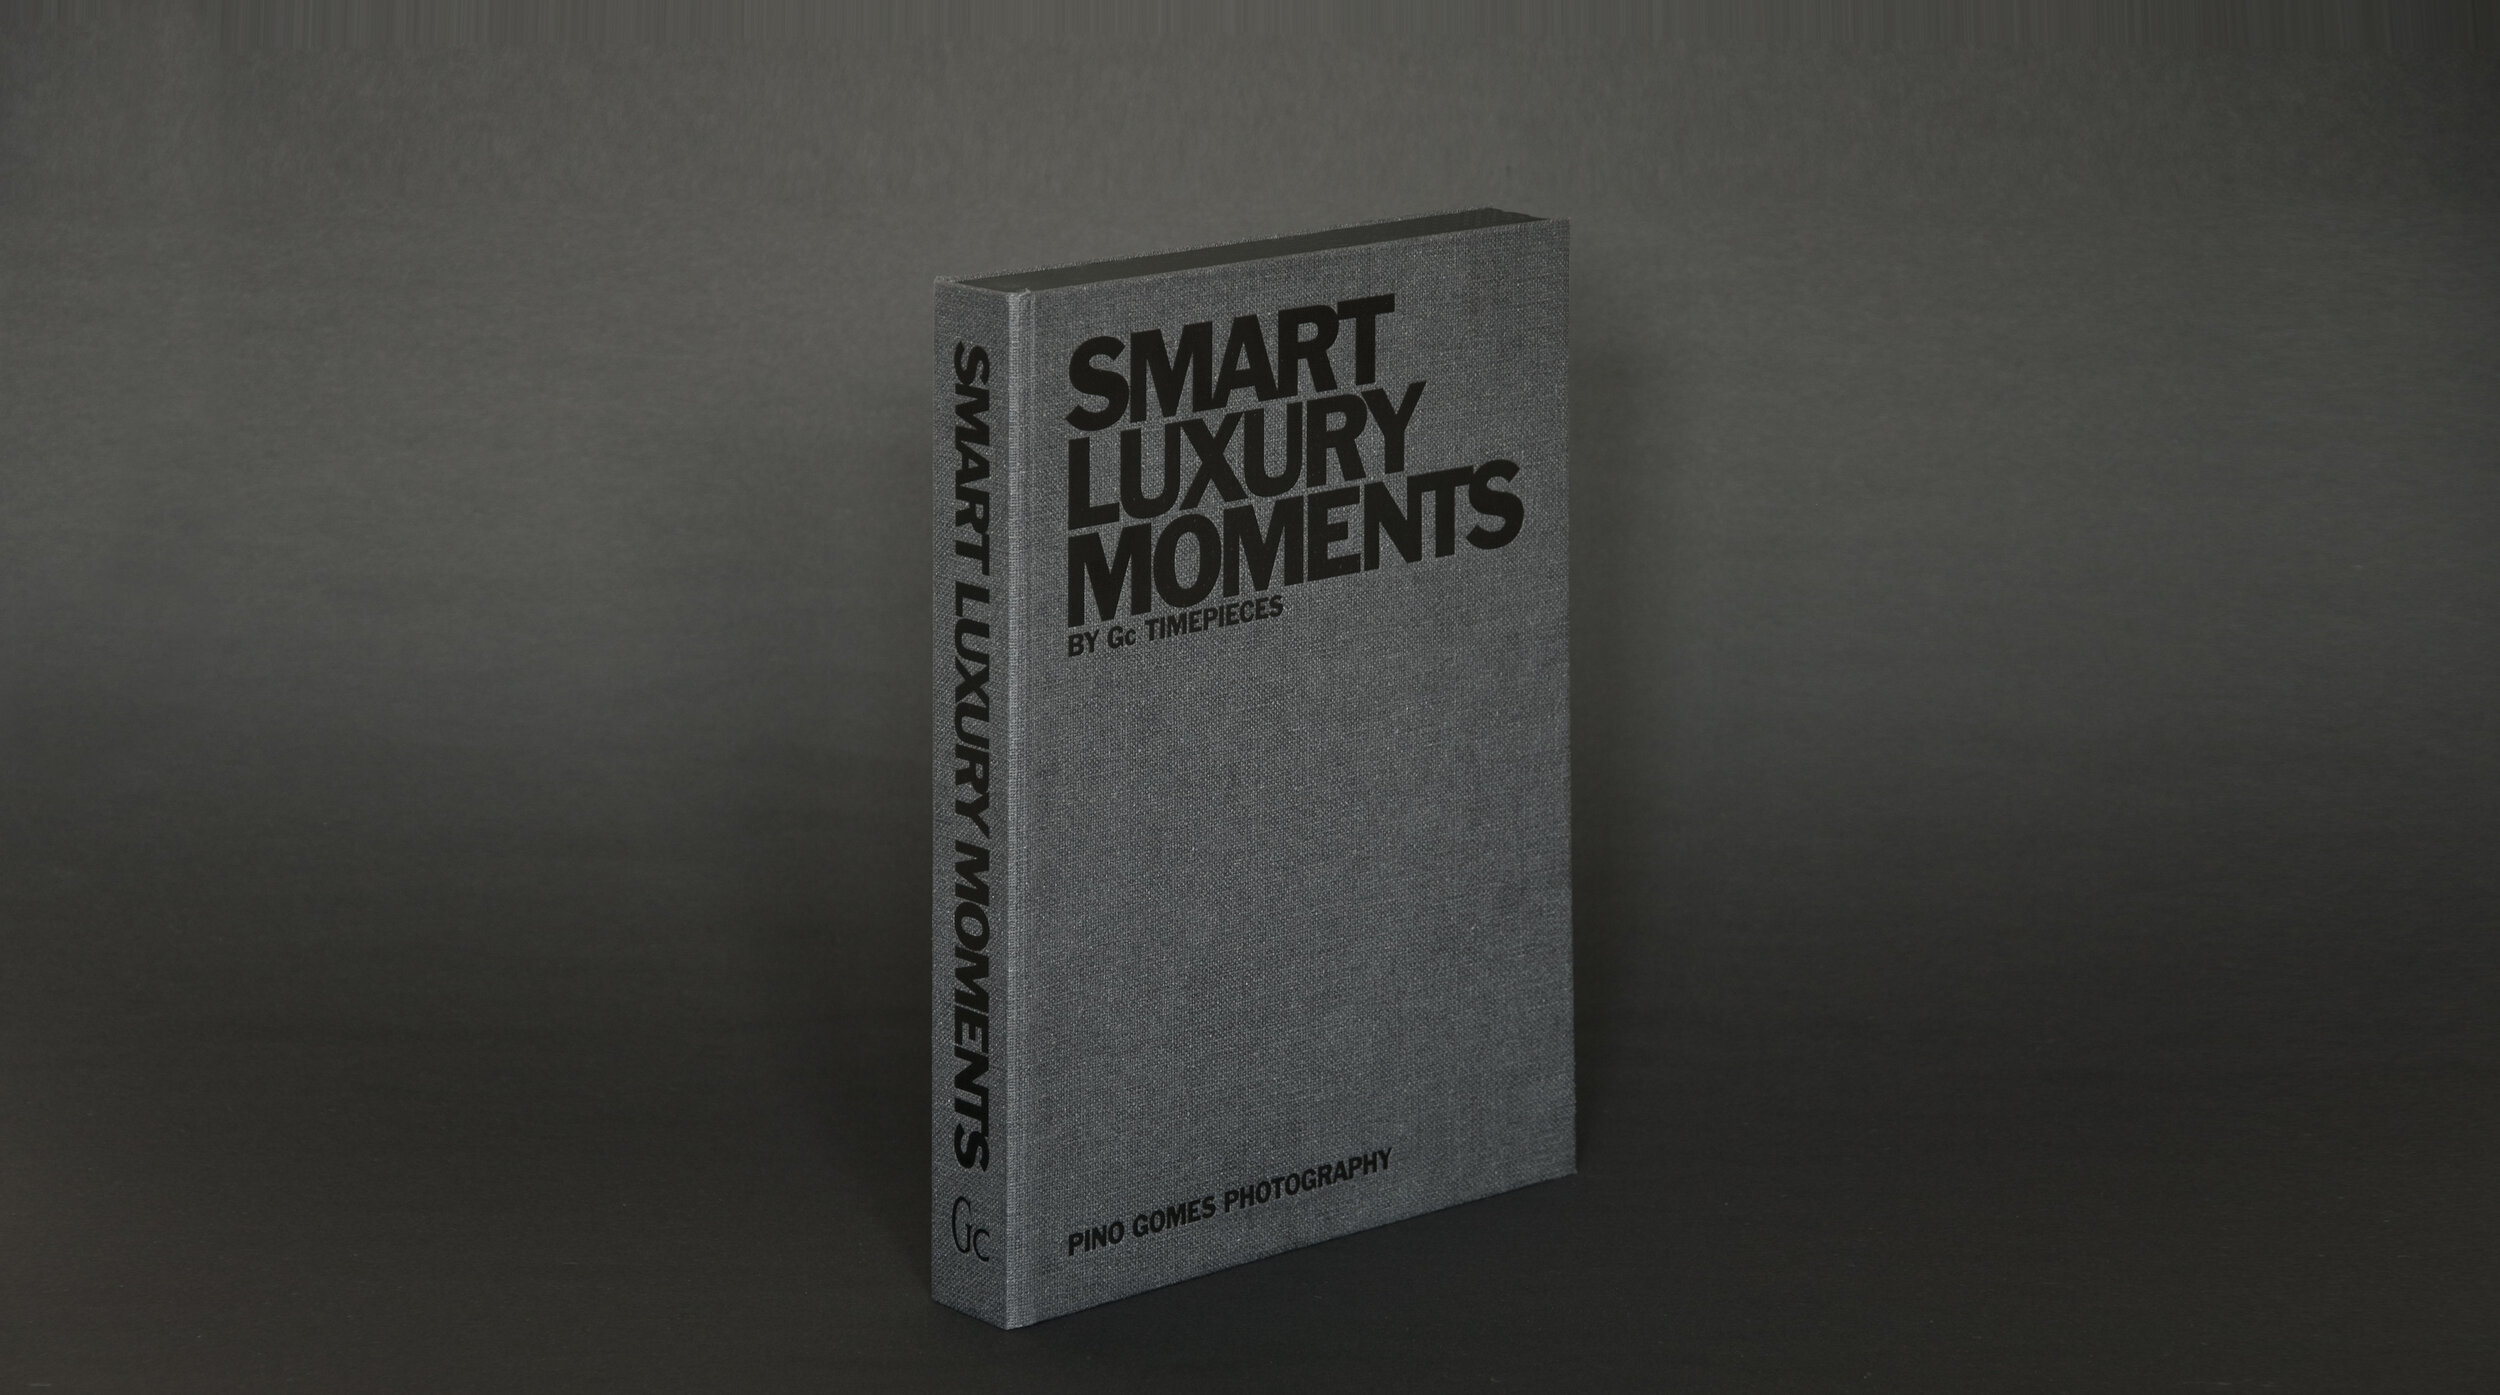 studio marcus kraft: smart luxury moments